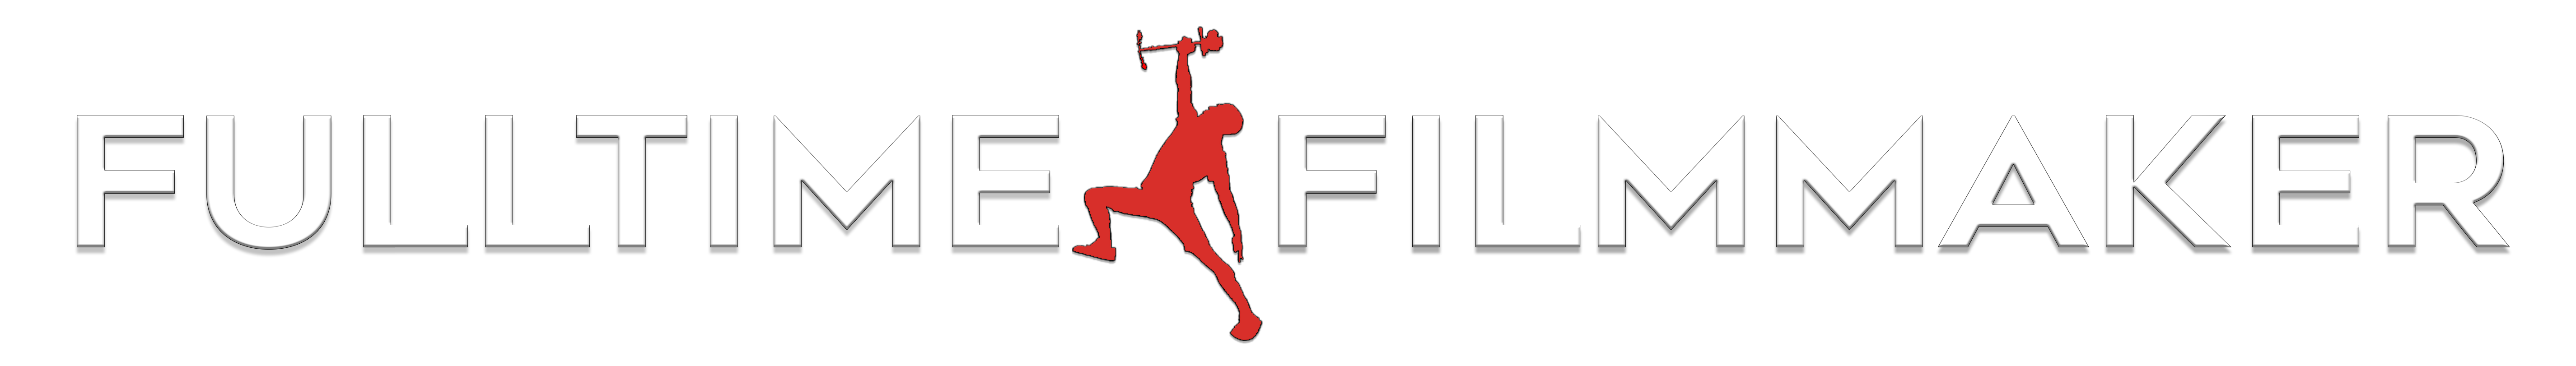 fulltimefilmmaker logo NEW